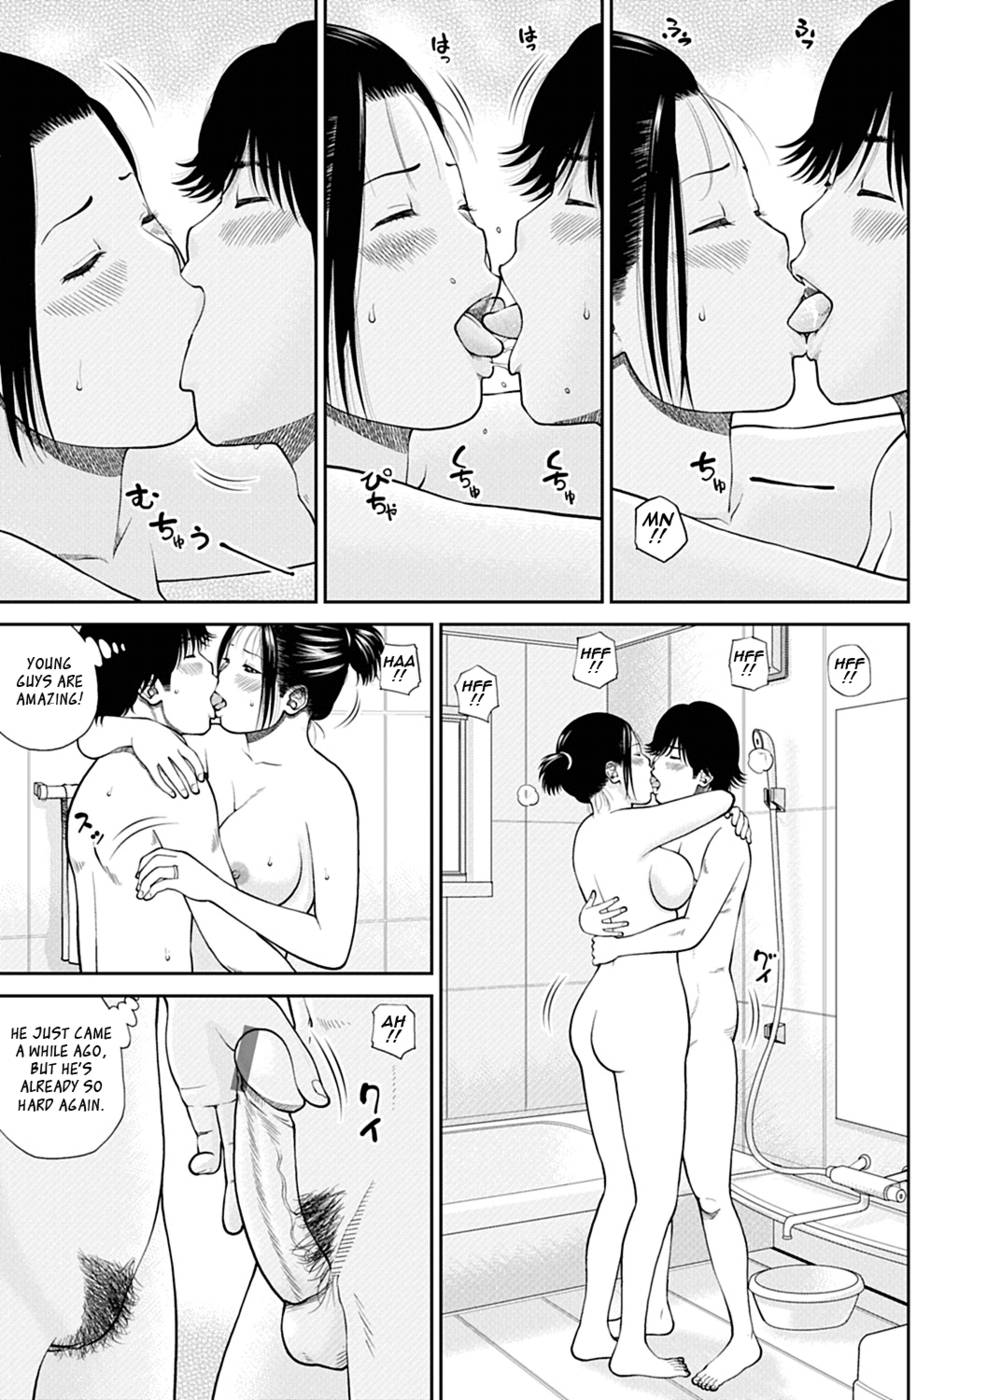 Hentai Manga Comic-34 Year Old Unsatisfied Wife-Chapter 2-Hard Kiss-Second Half-2